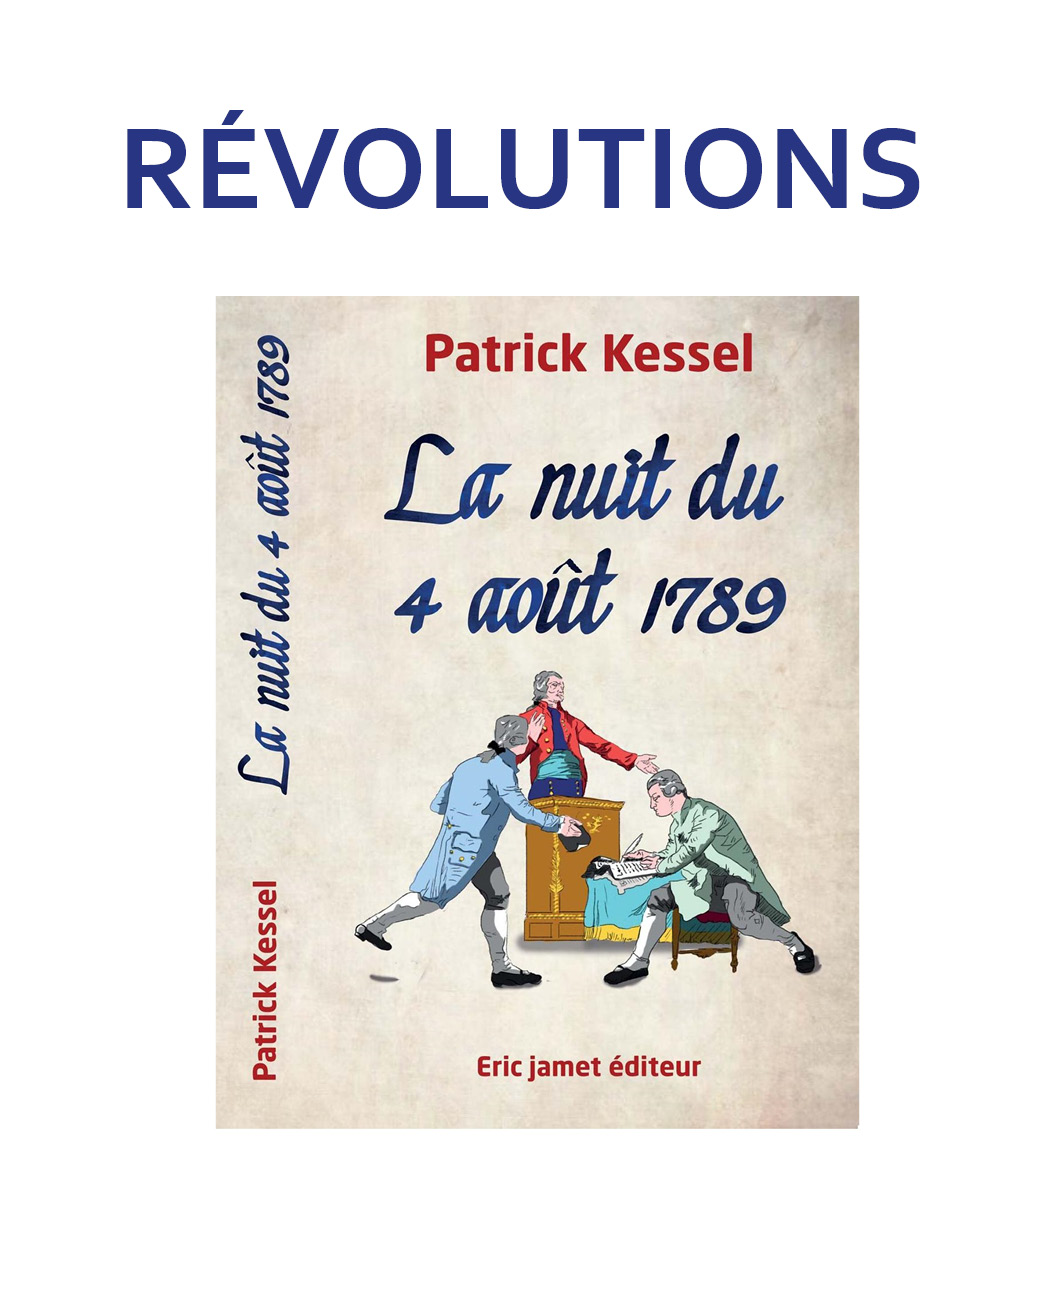  Révolutions 